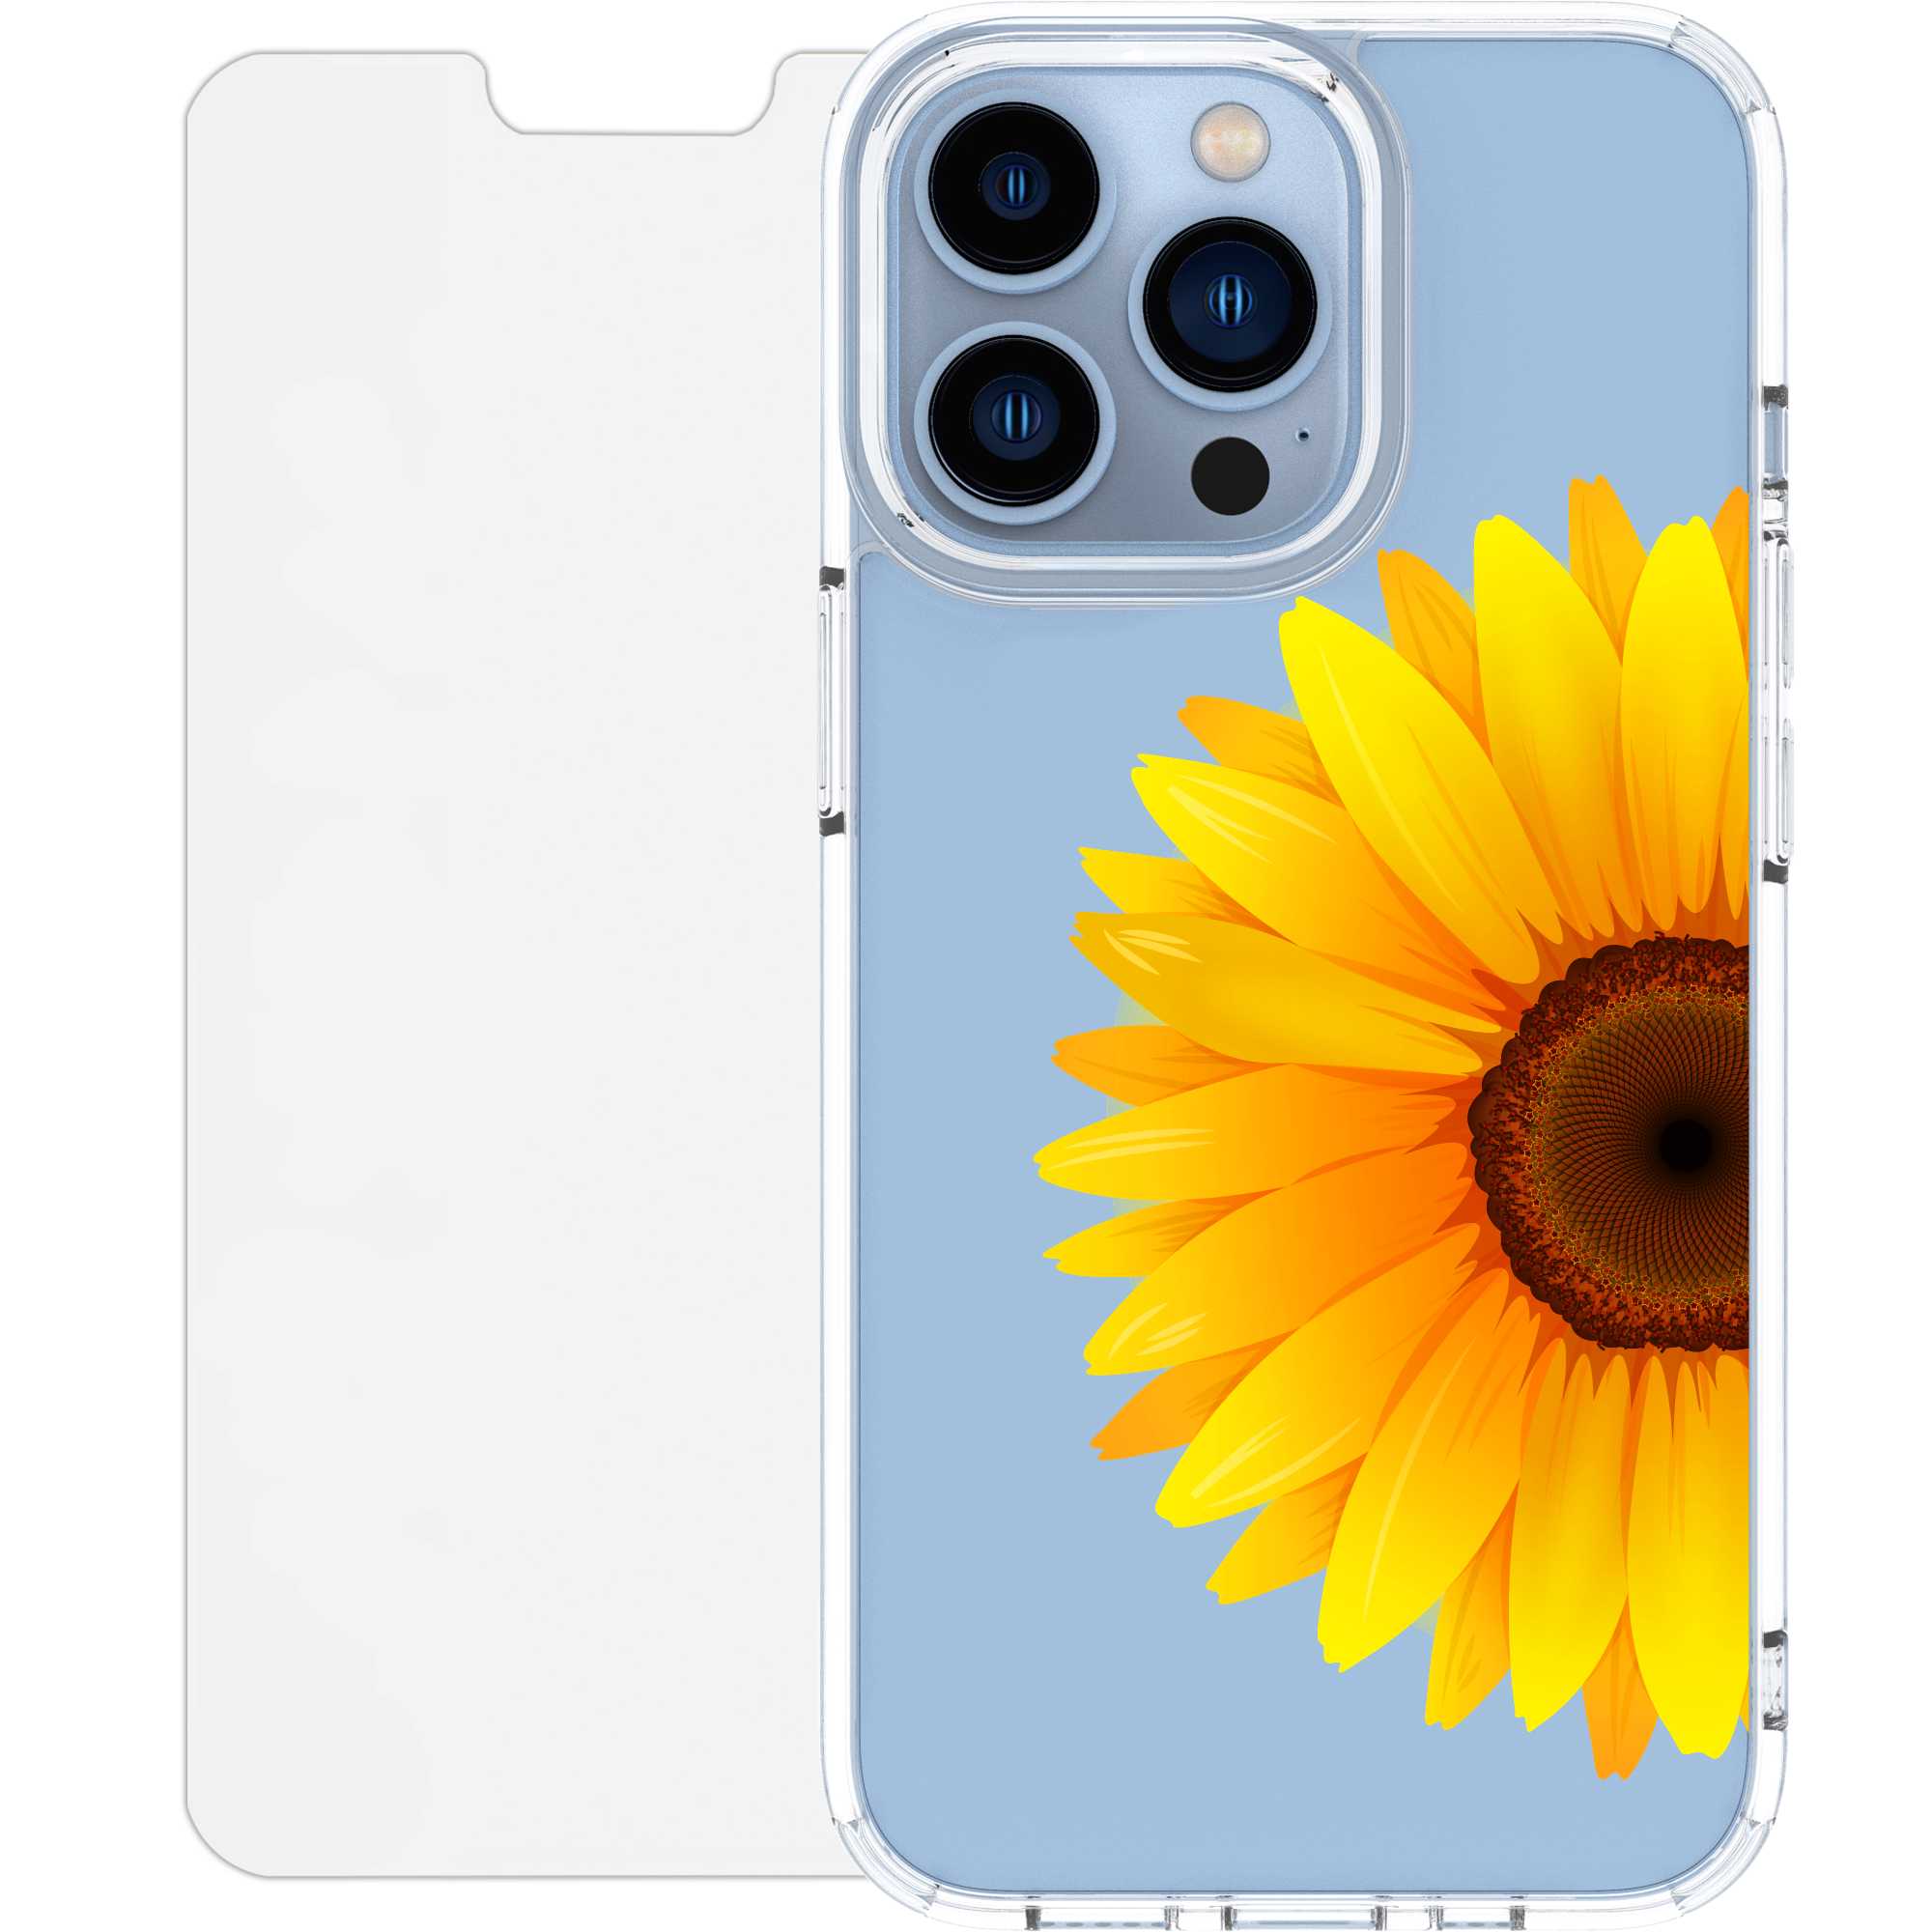 Scooch CrystalCase for iPhone 13 Pro Sunflower Scooch CrystalCase